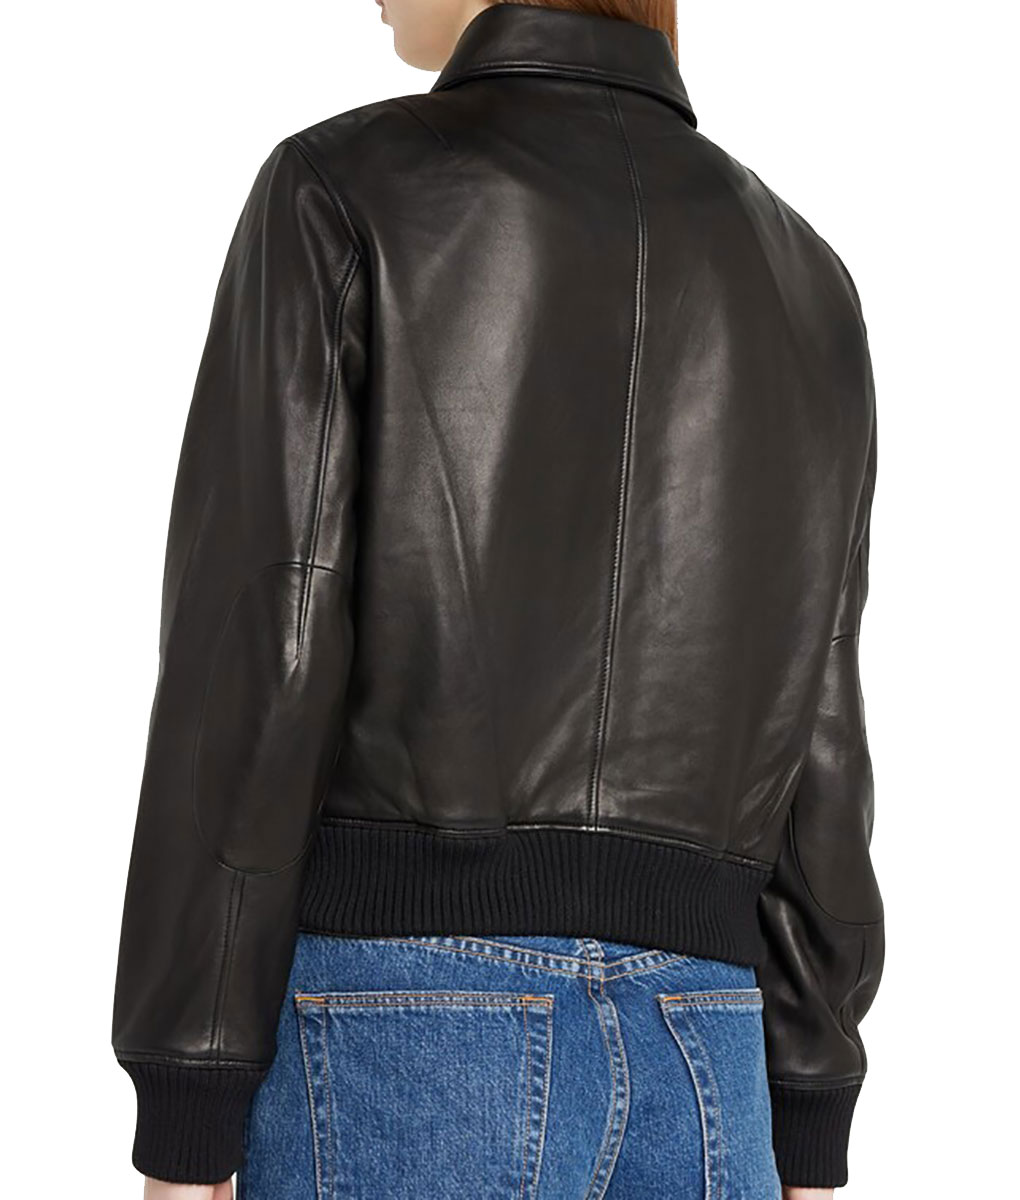 Jennifer-Connelly-Dark-Matter-Leather-Jacket-4